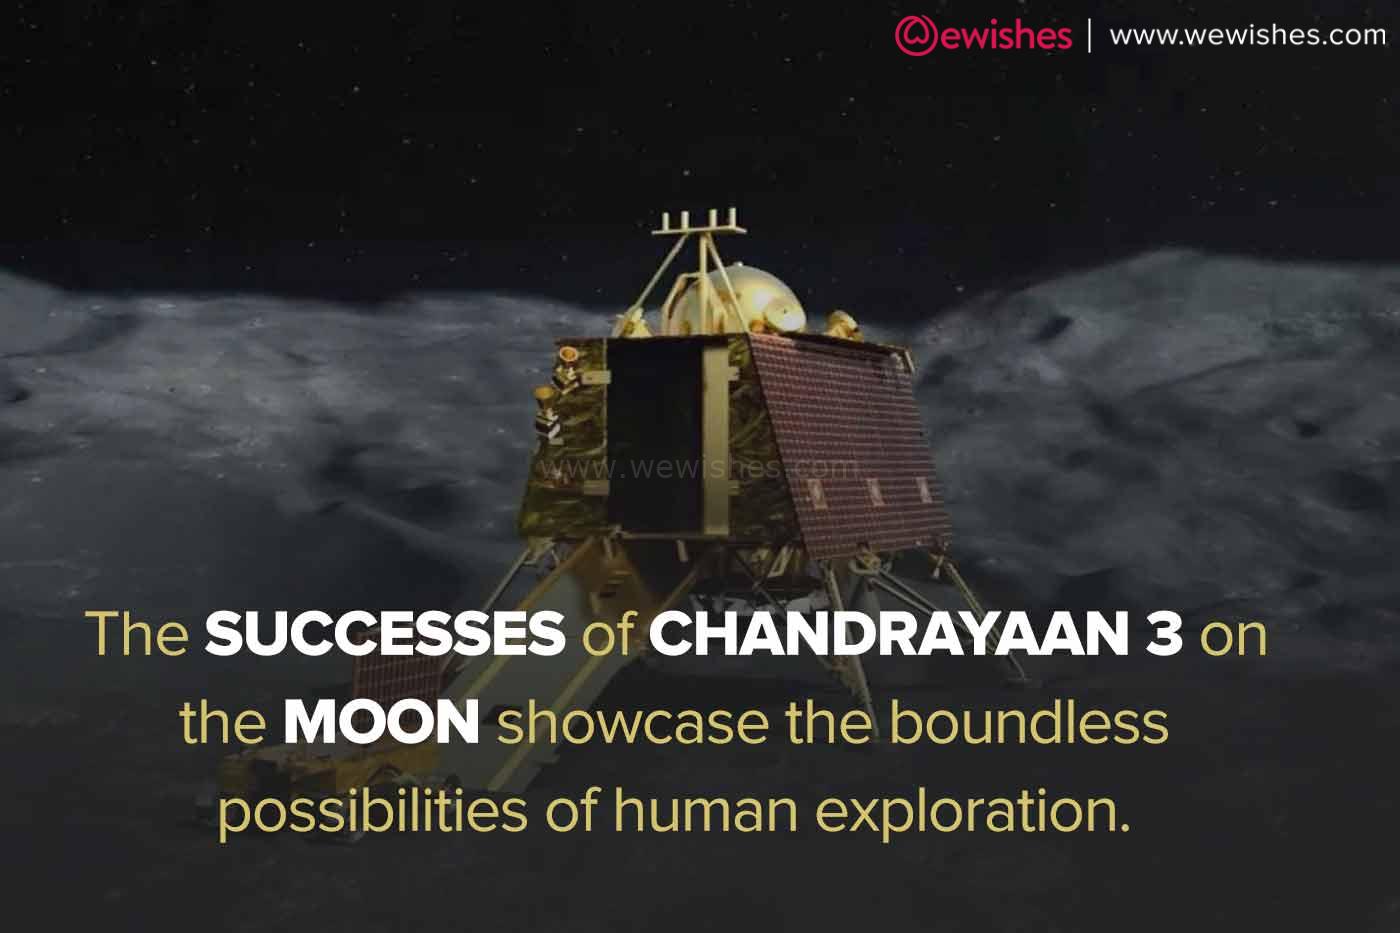 Chandrayaan 3 